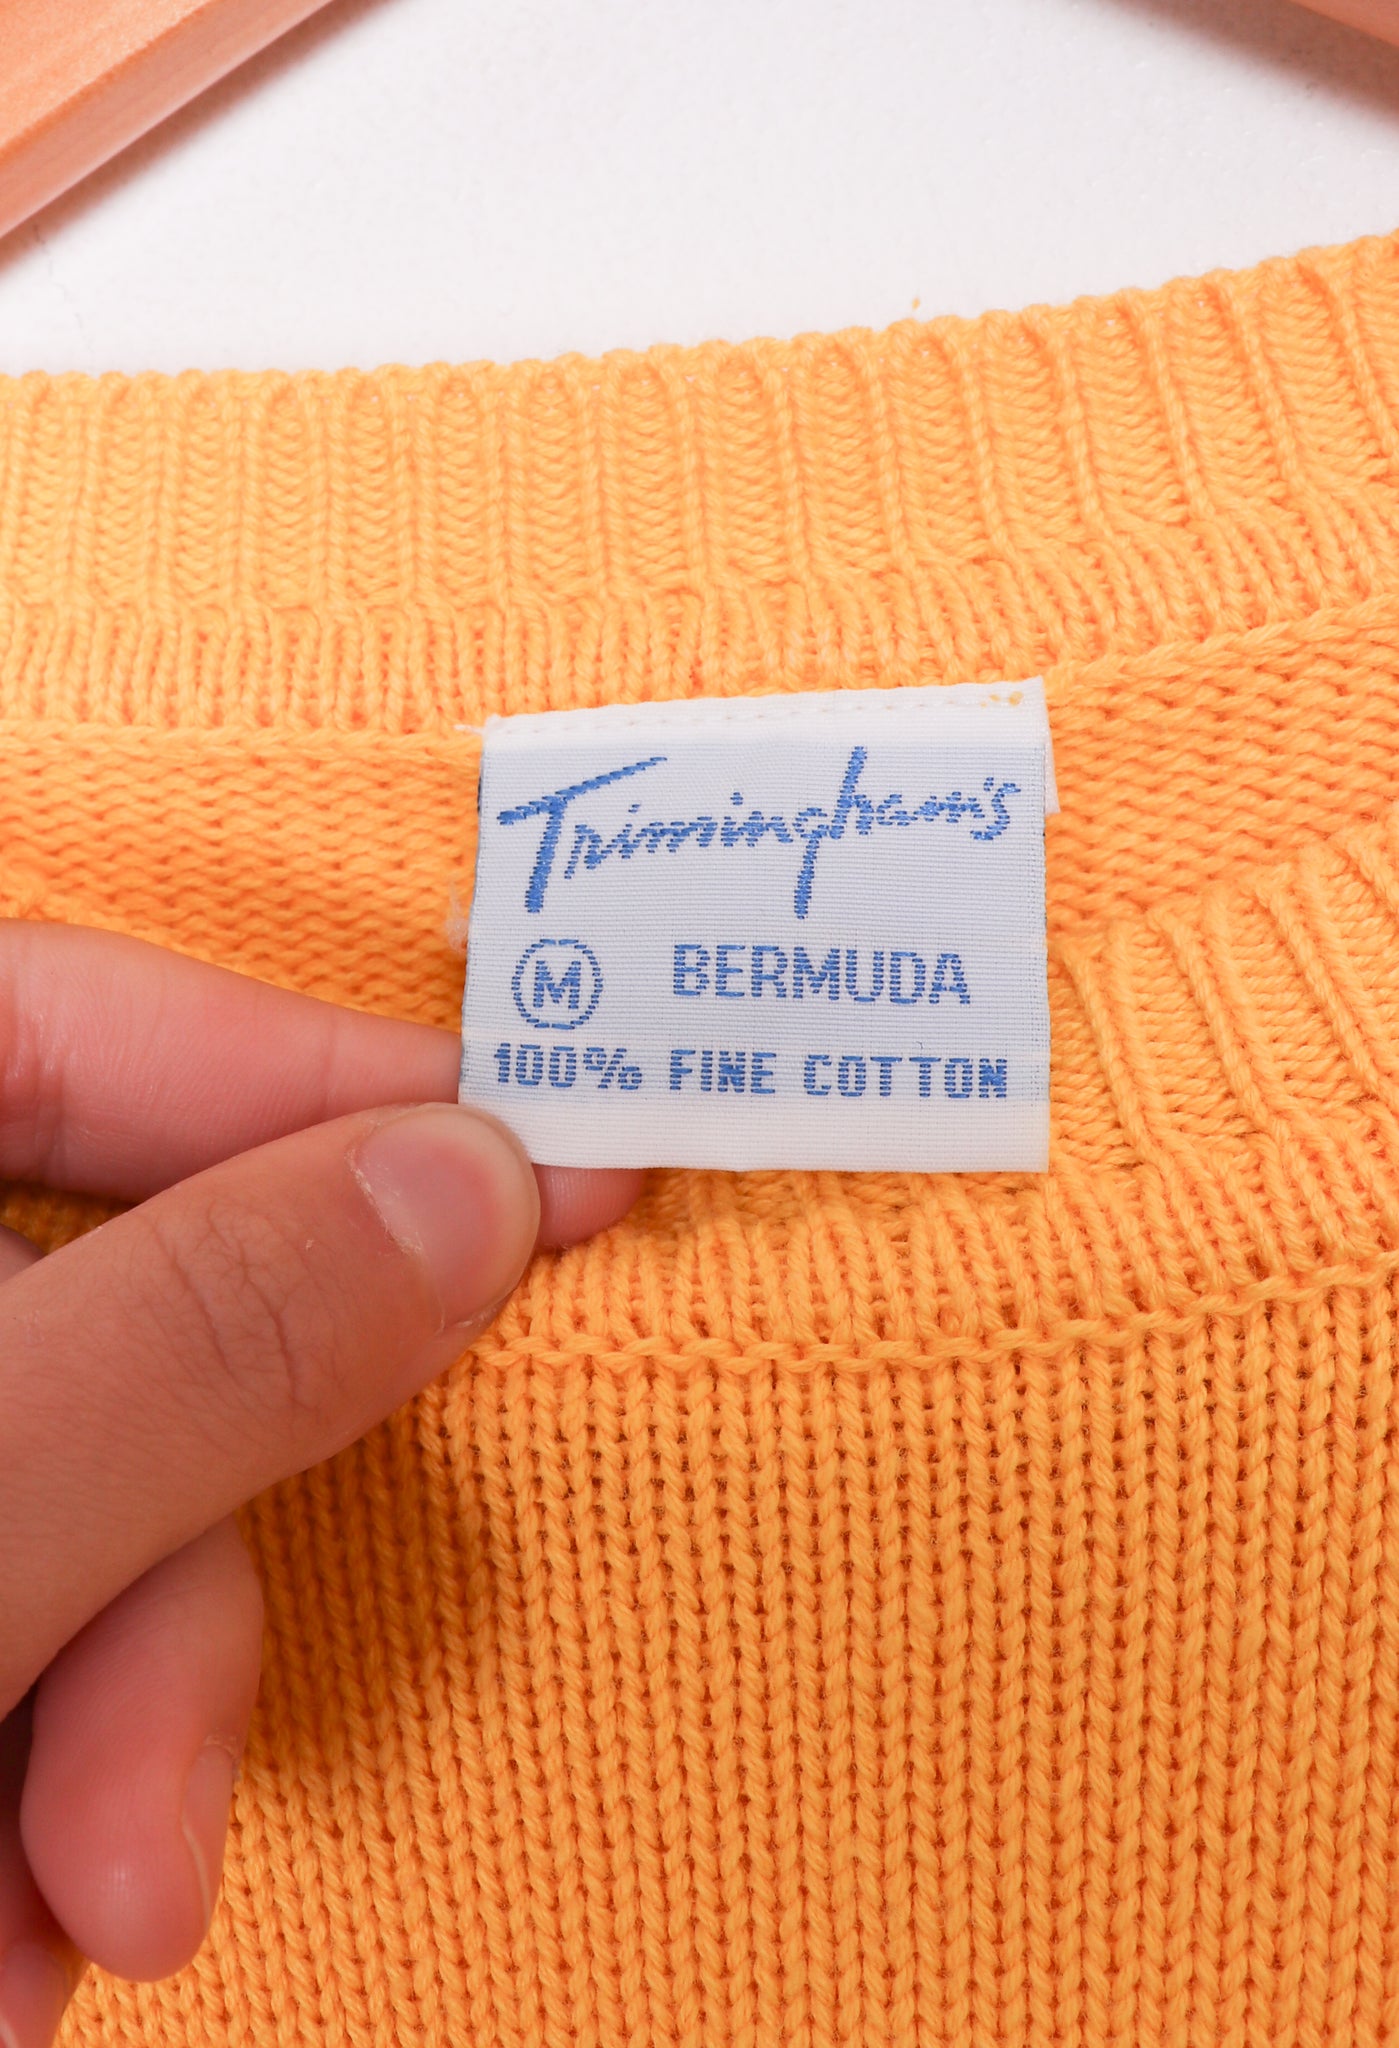 90s Bermuda Yellow Knit Sweater